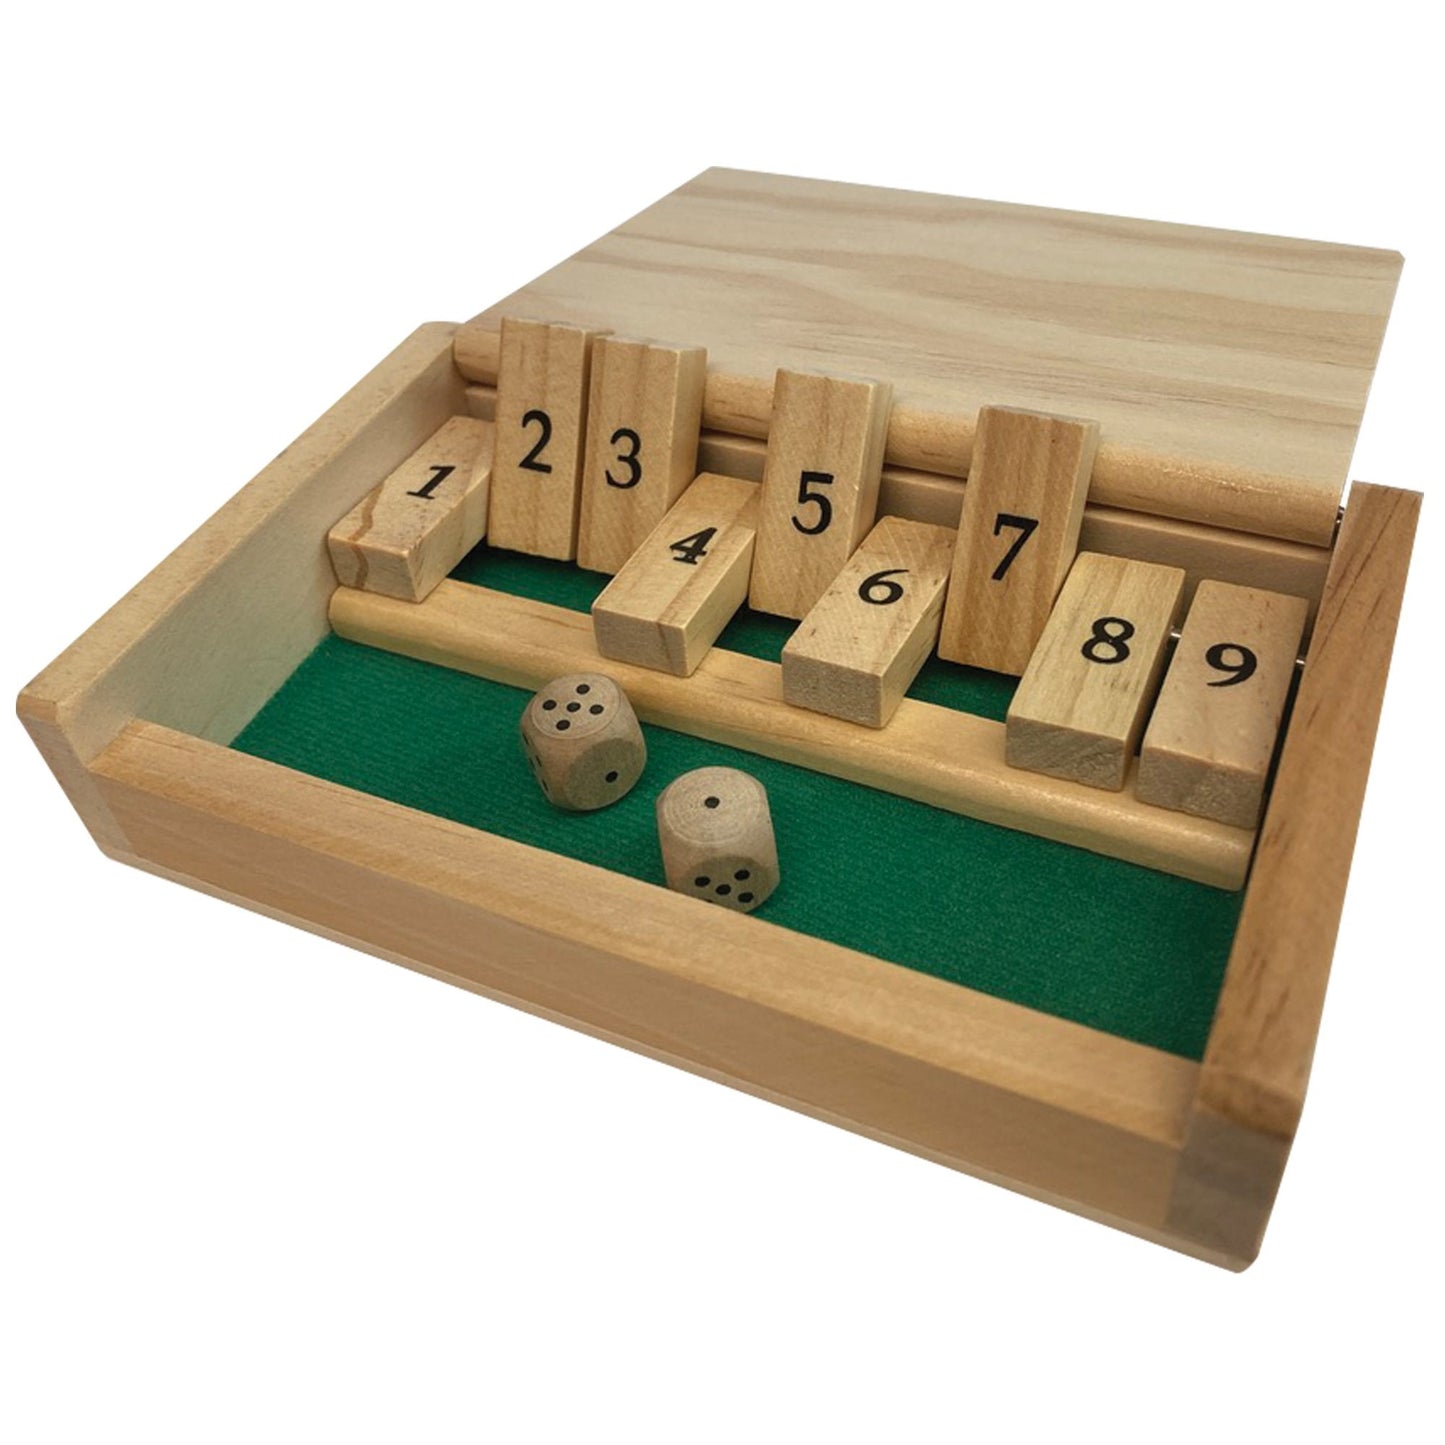 Wooden Shut-The-Box Game